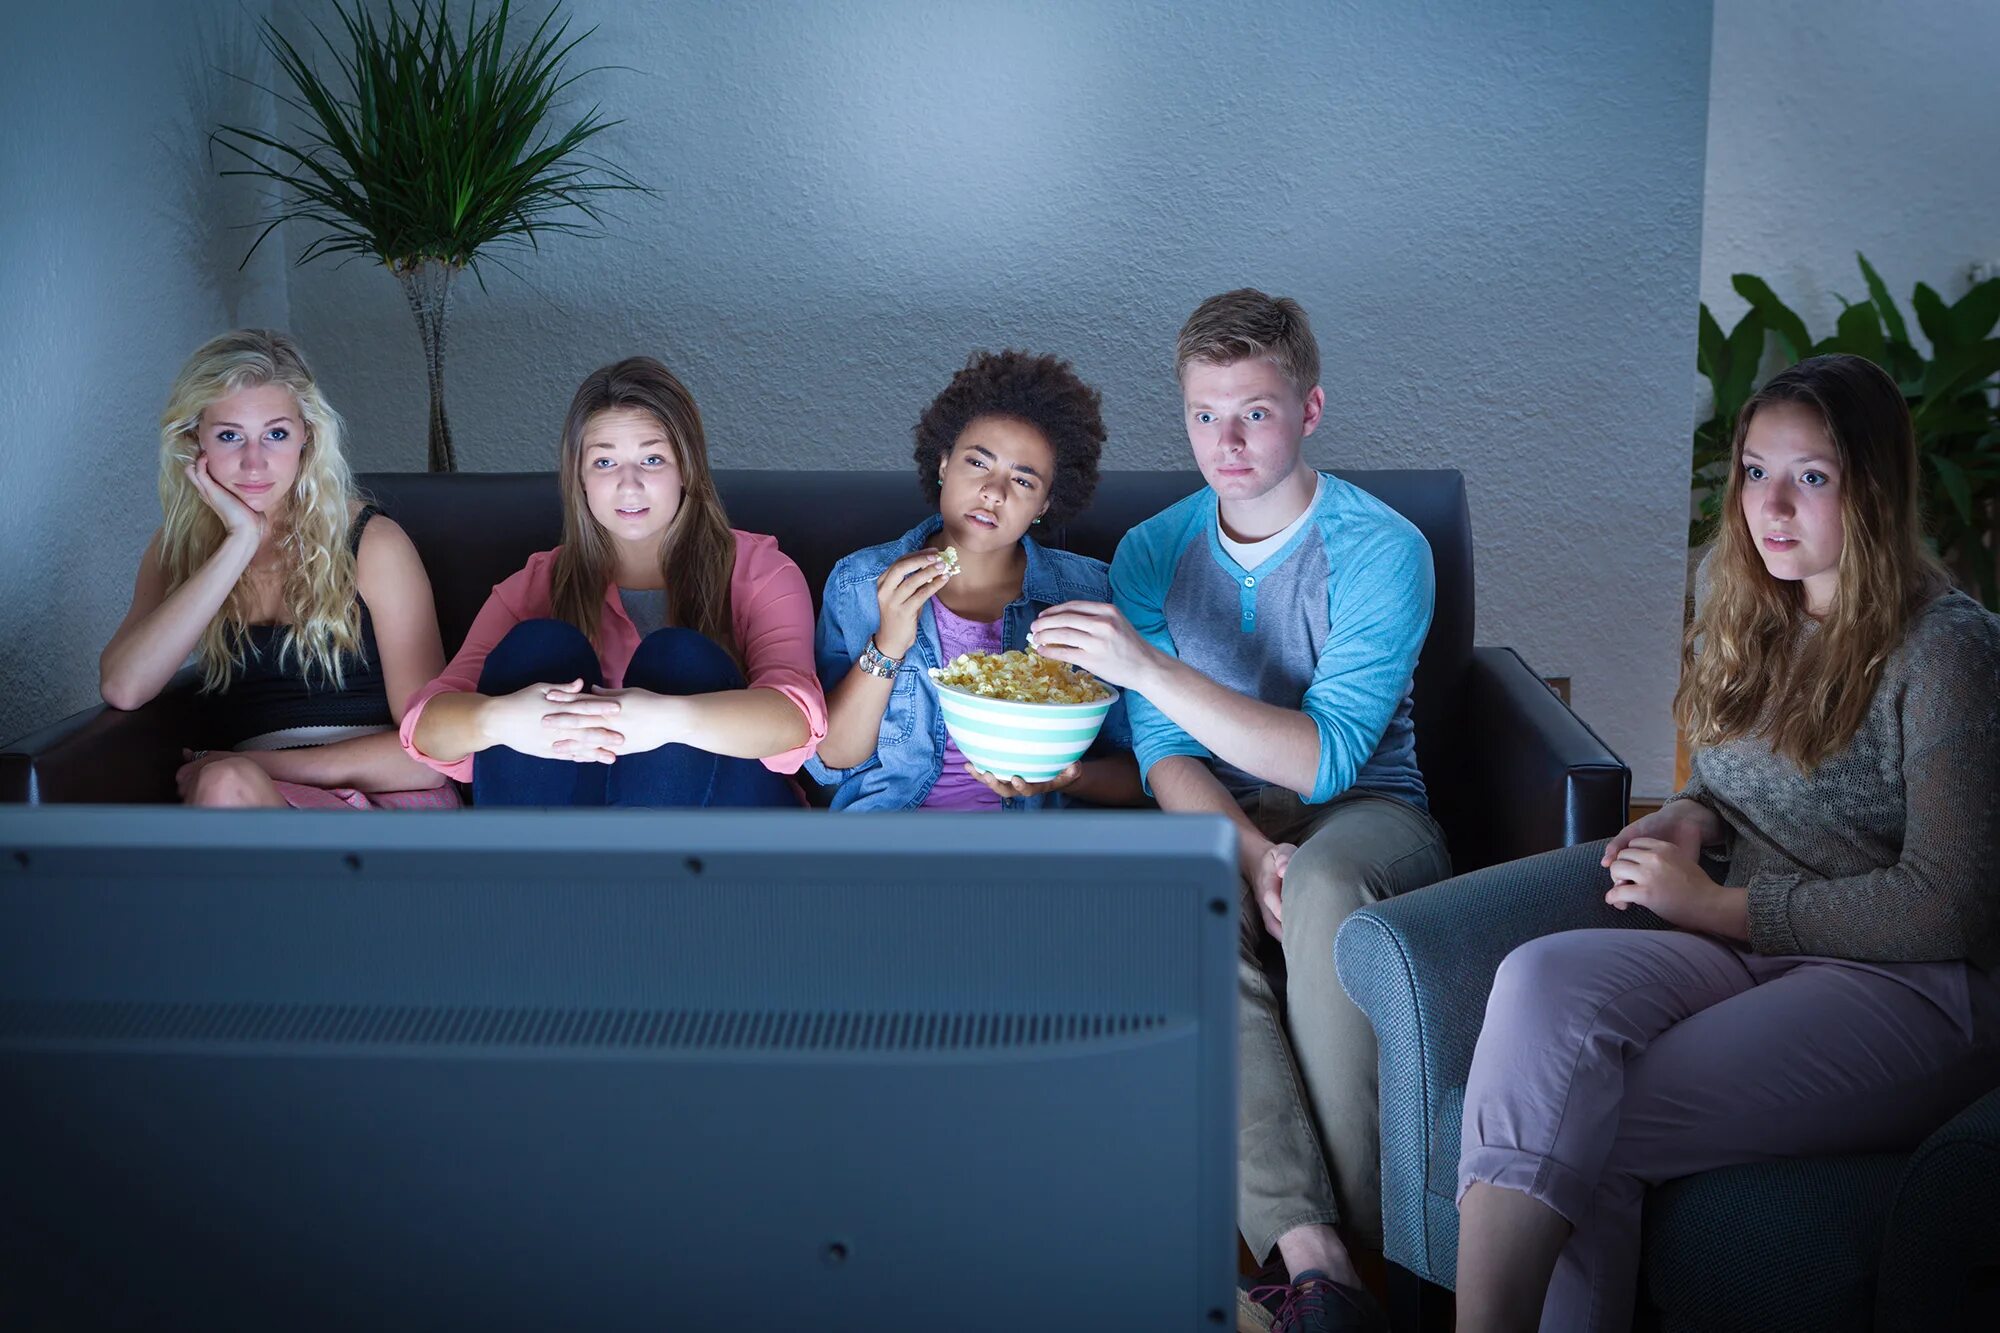 Student tv. Молодежь у телевизора. Телевидение и подросток. Подросток перед теликом. Киноклуб для подростков.